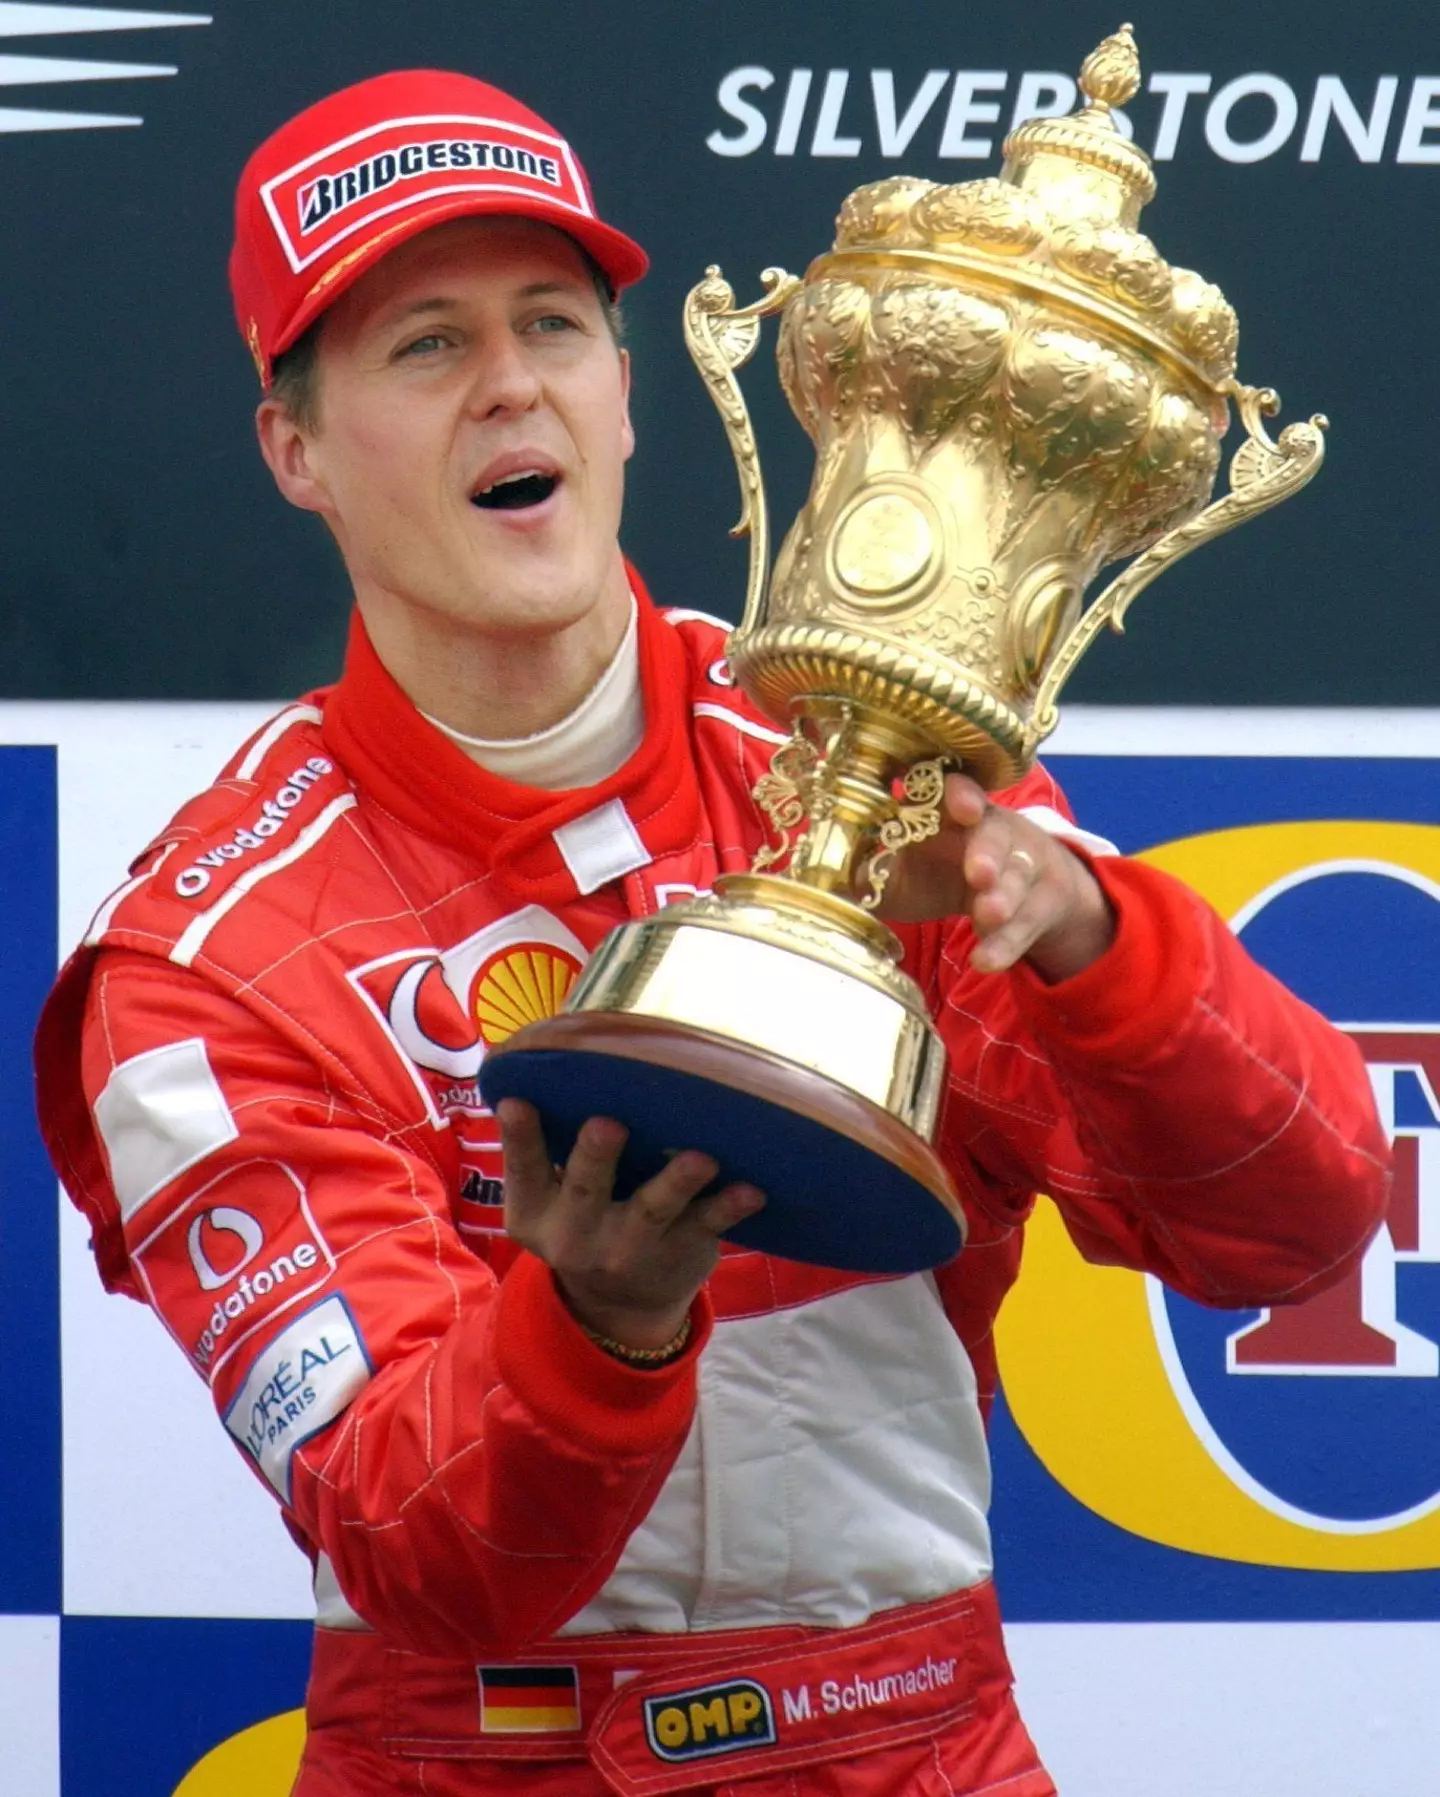 Michael Schumacher won seven Formula One titles in his glittering career.